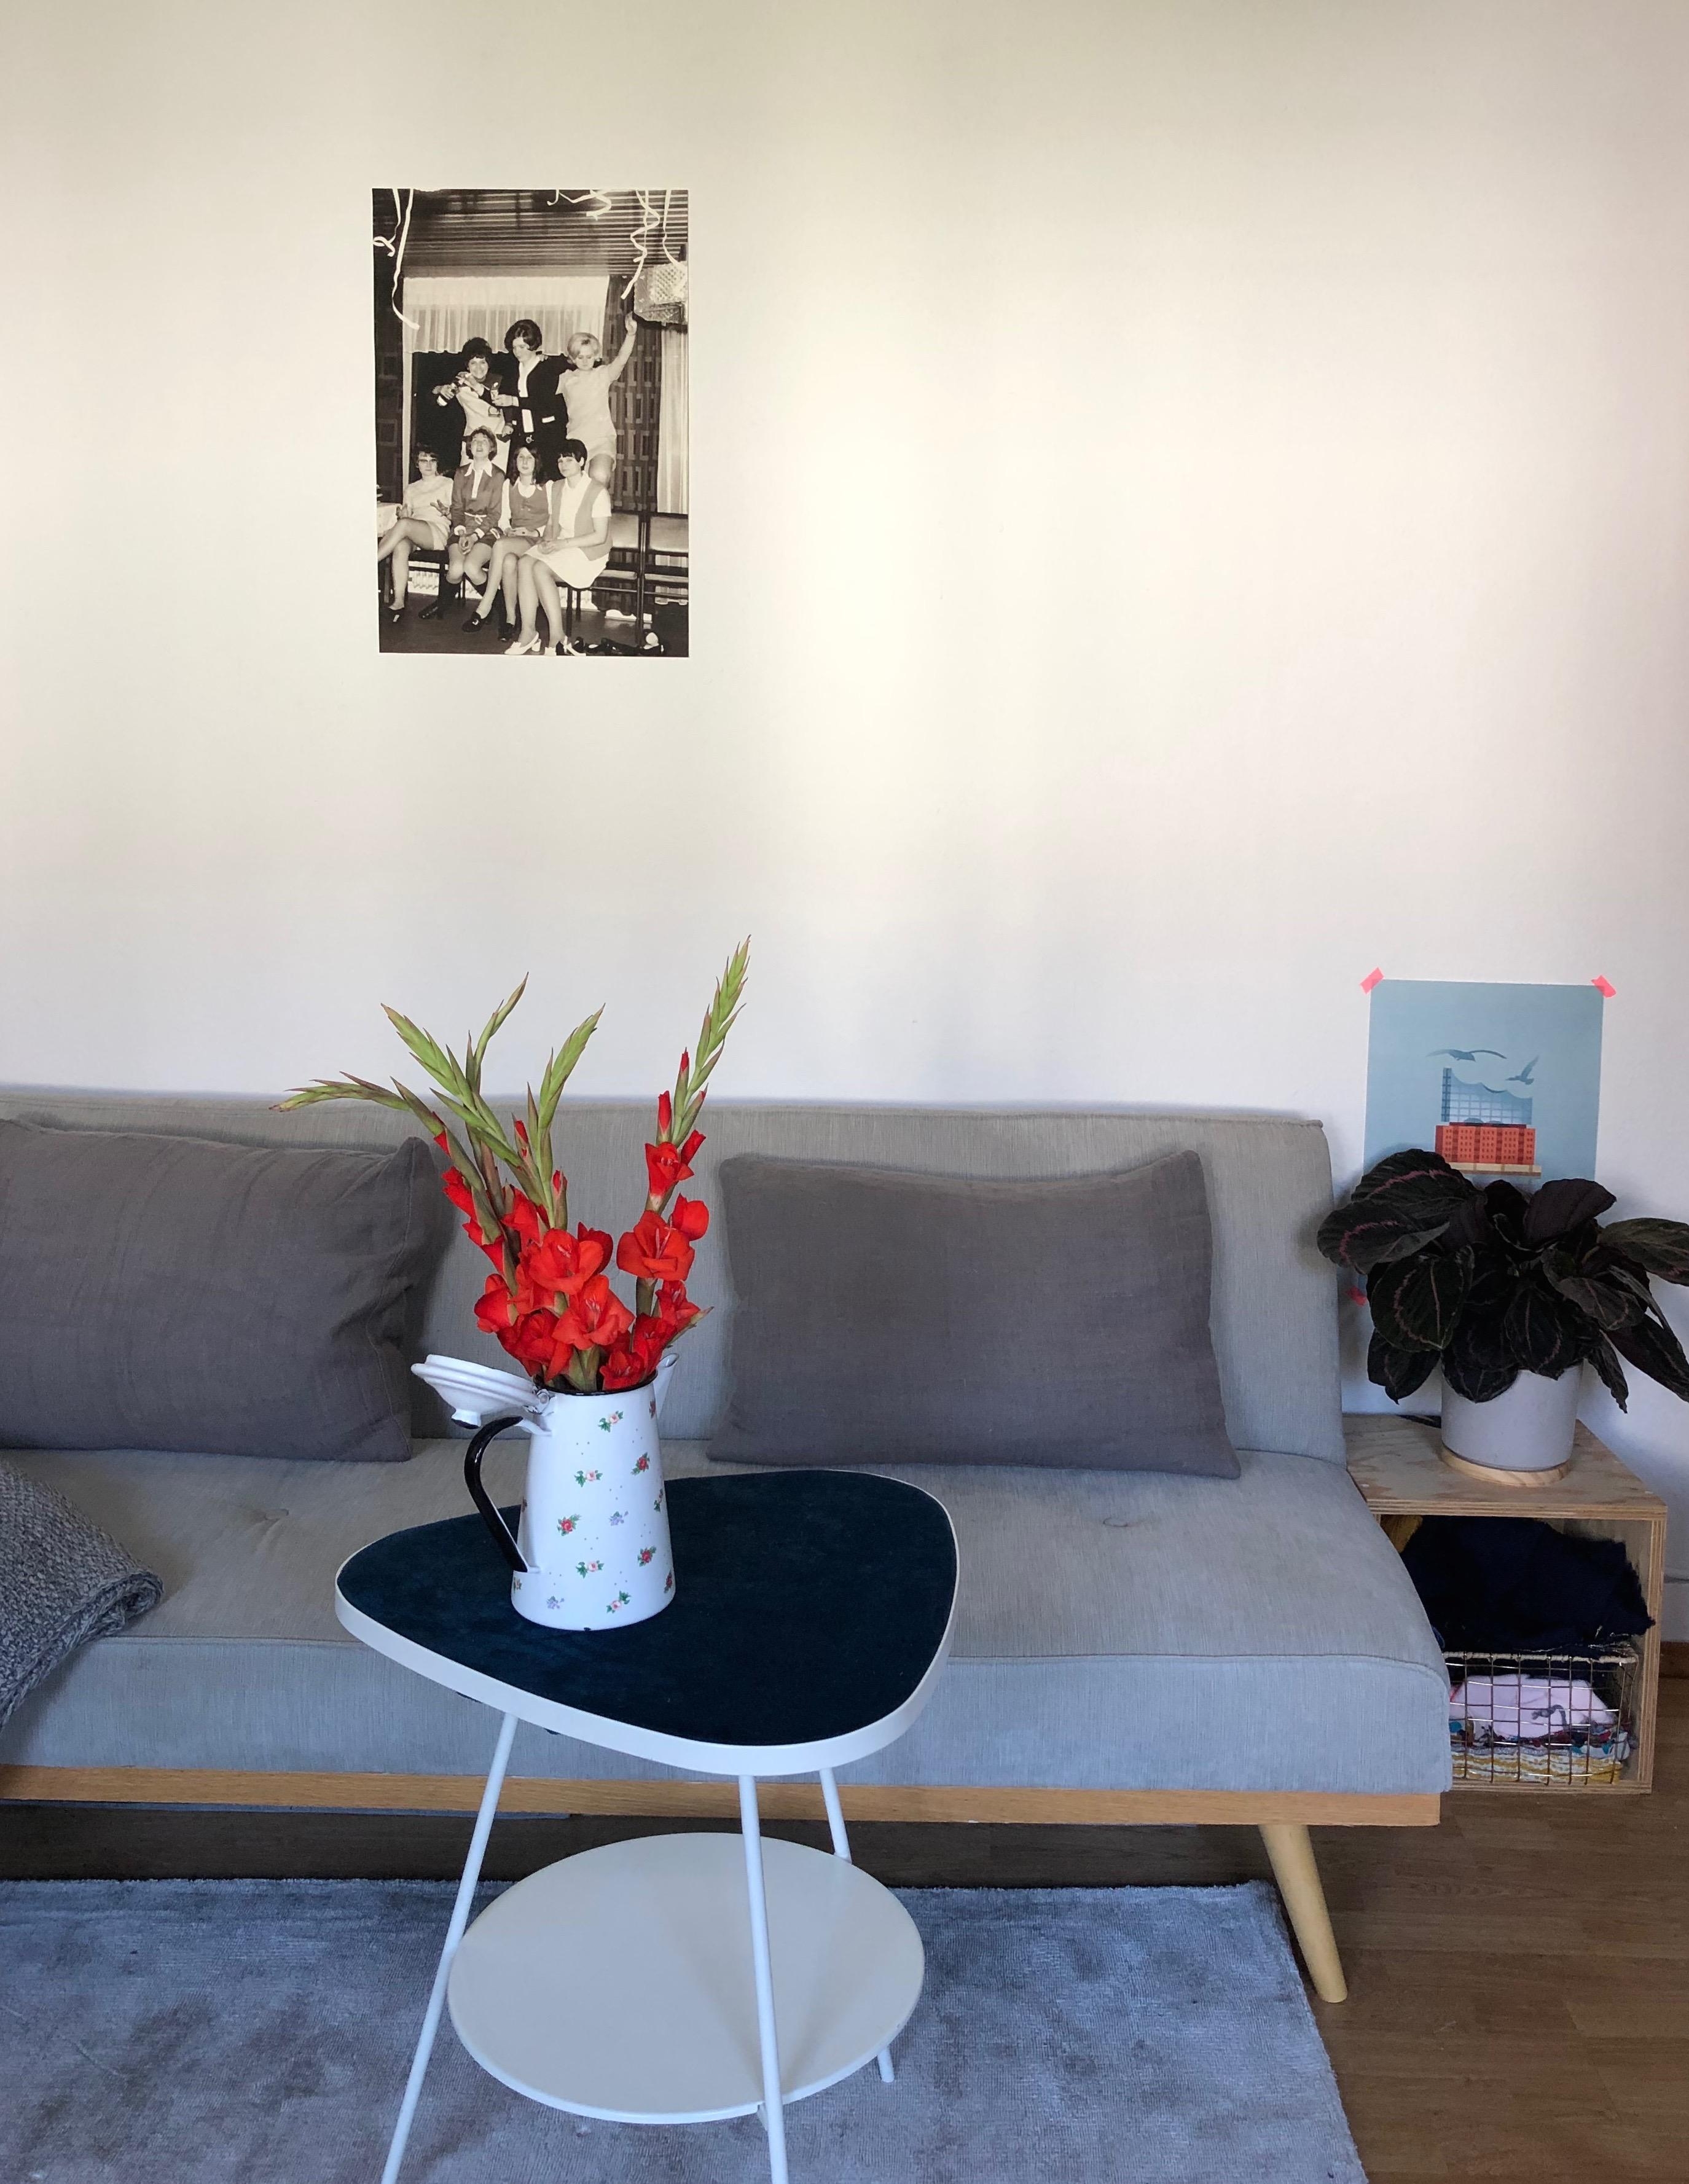 SLOTH
#lazycouchday #couch #flowers #gladiolen #plants #grey #mylivingroom #interiorlove #hamburg